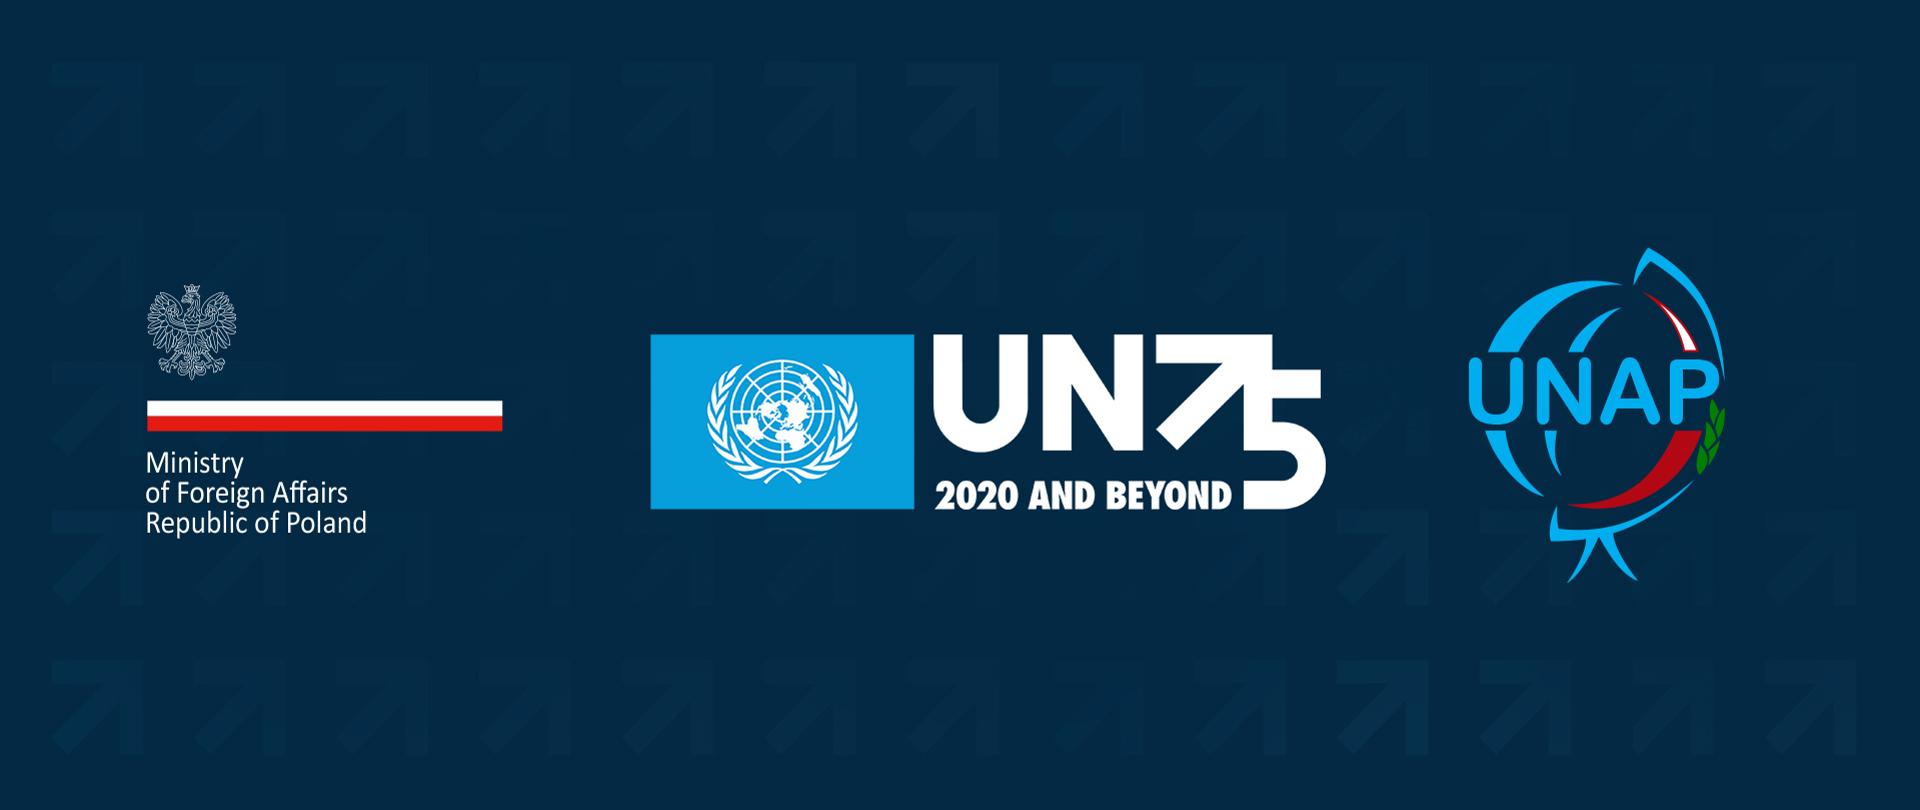 UN 75 years